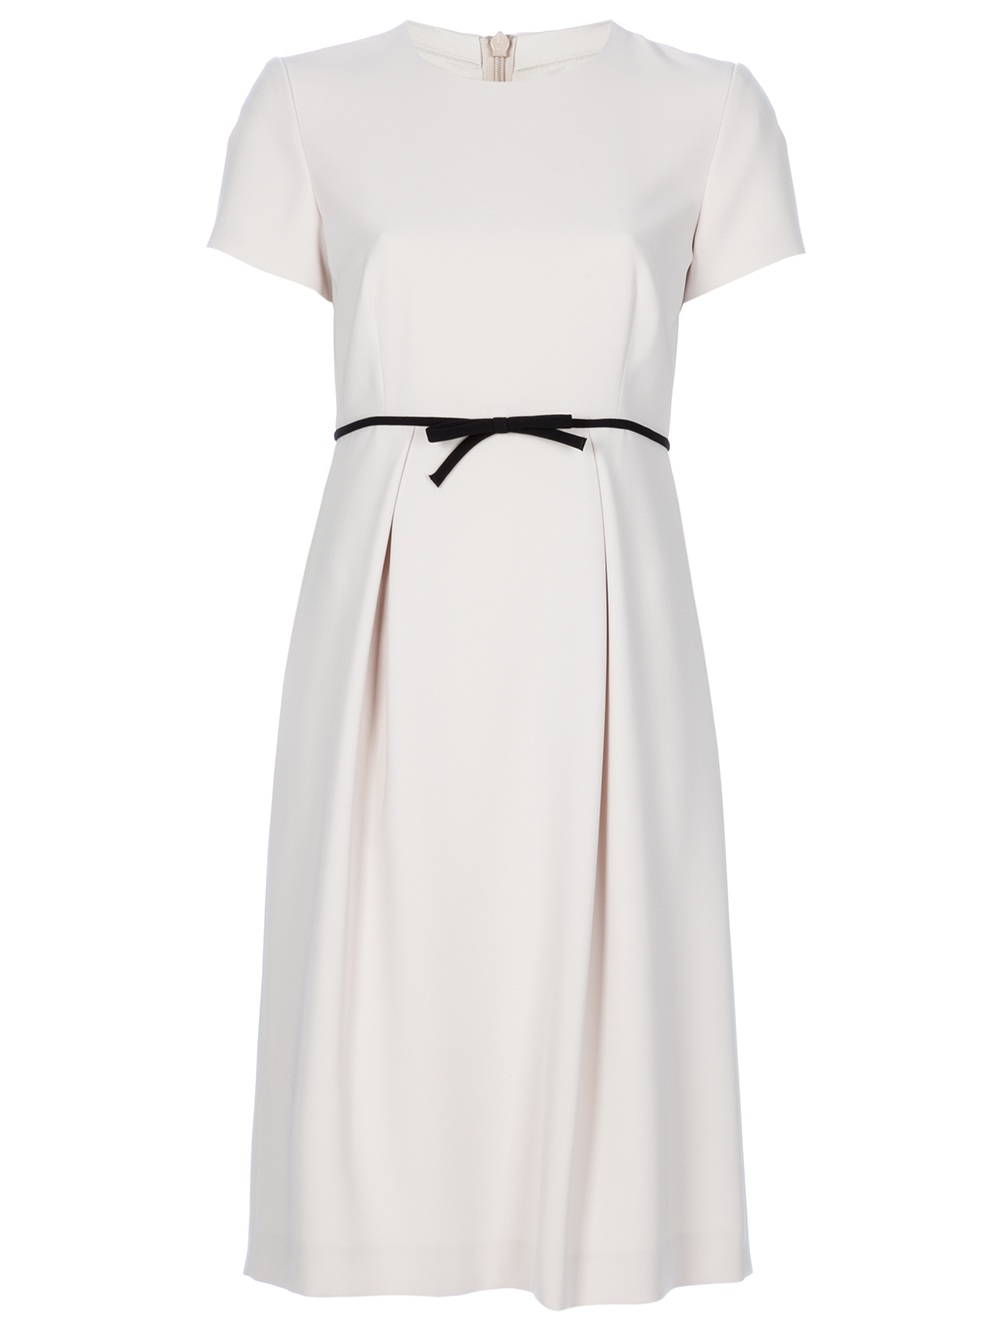 Max mara studio Verace Dress in White | Lyst